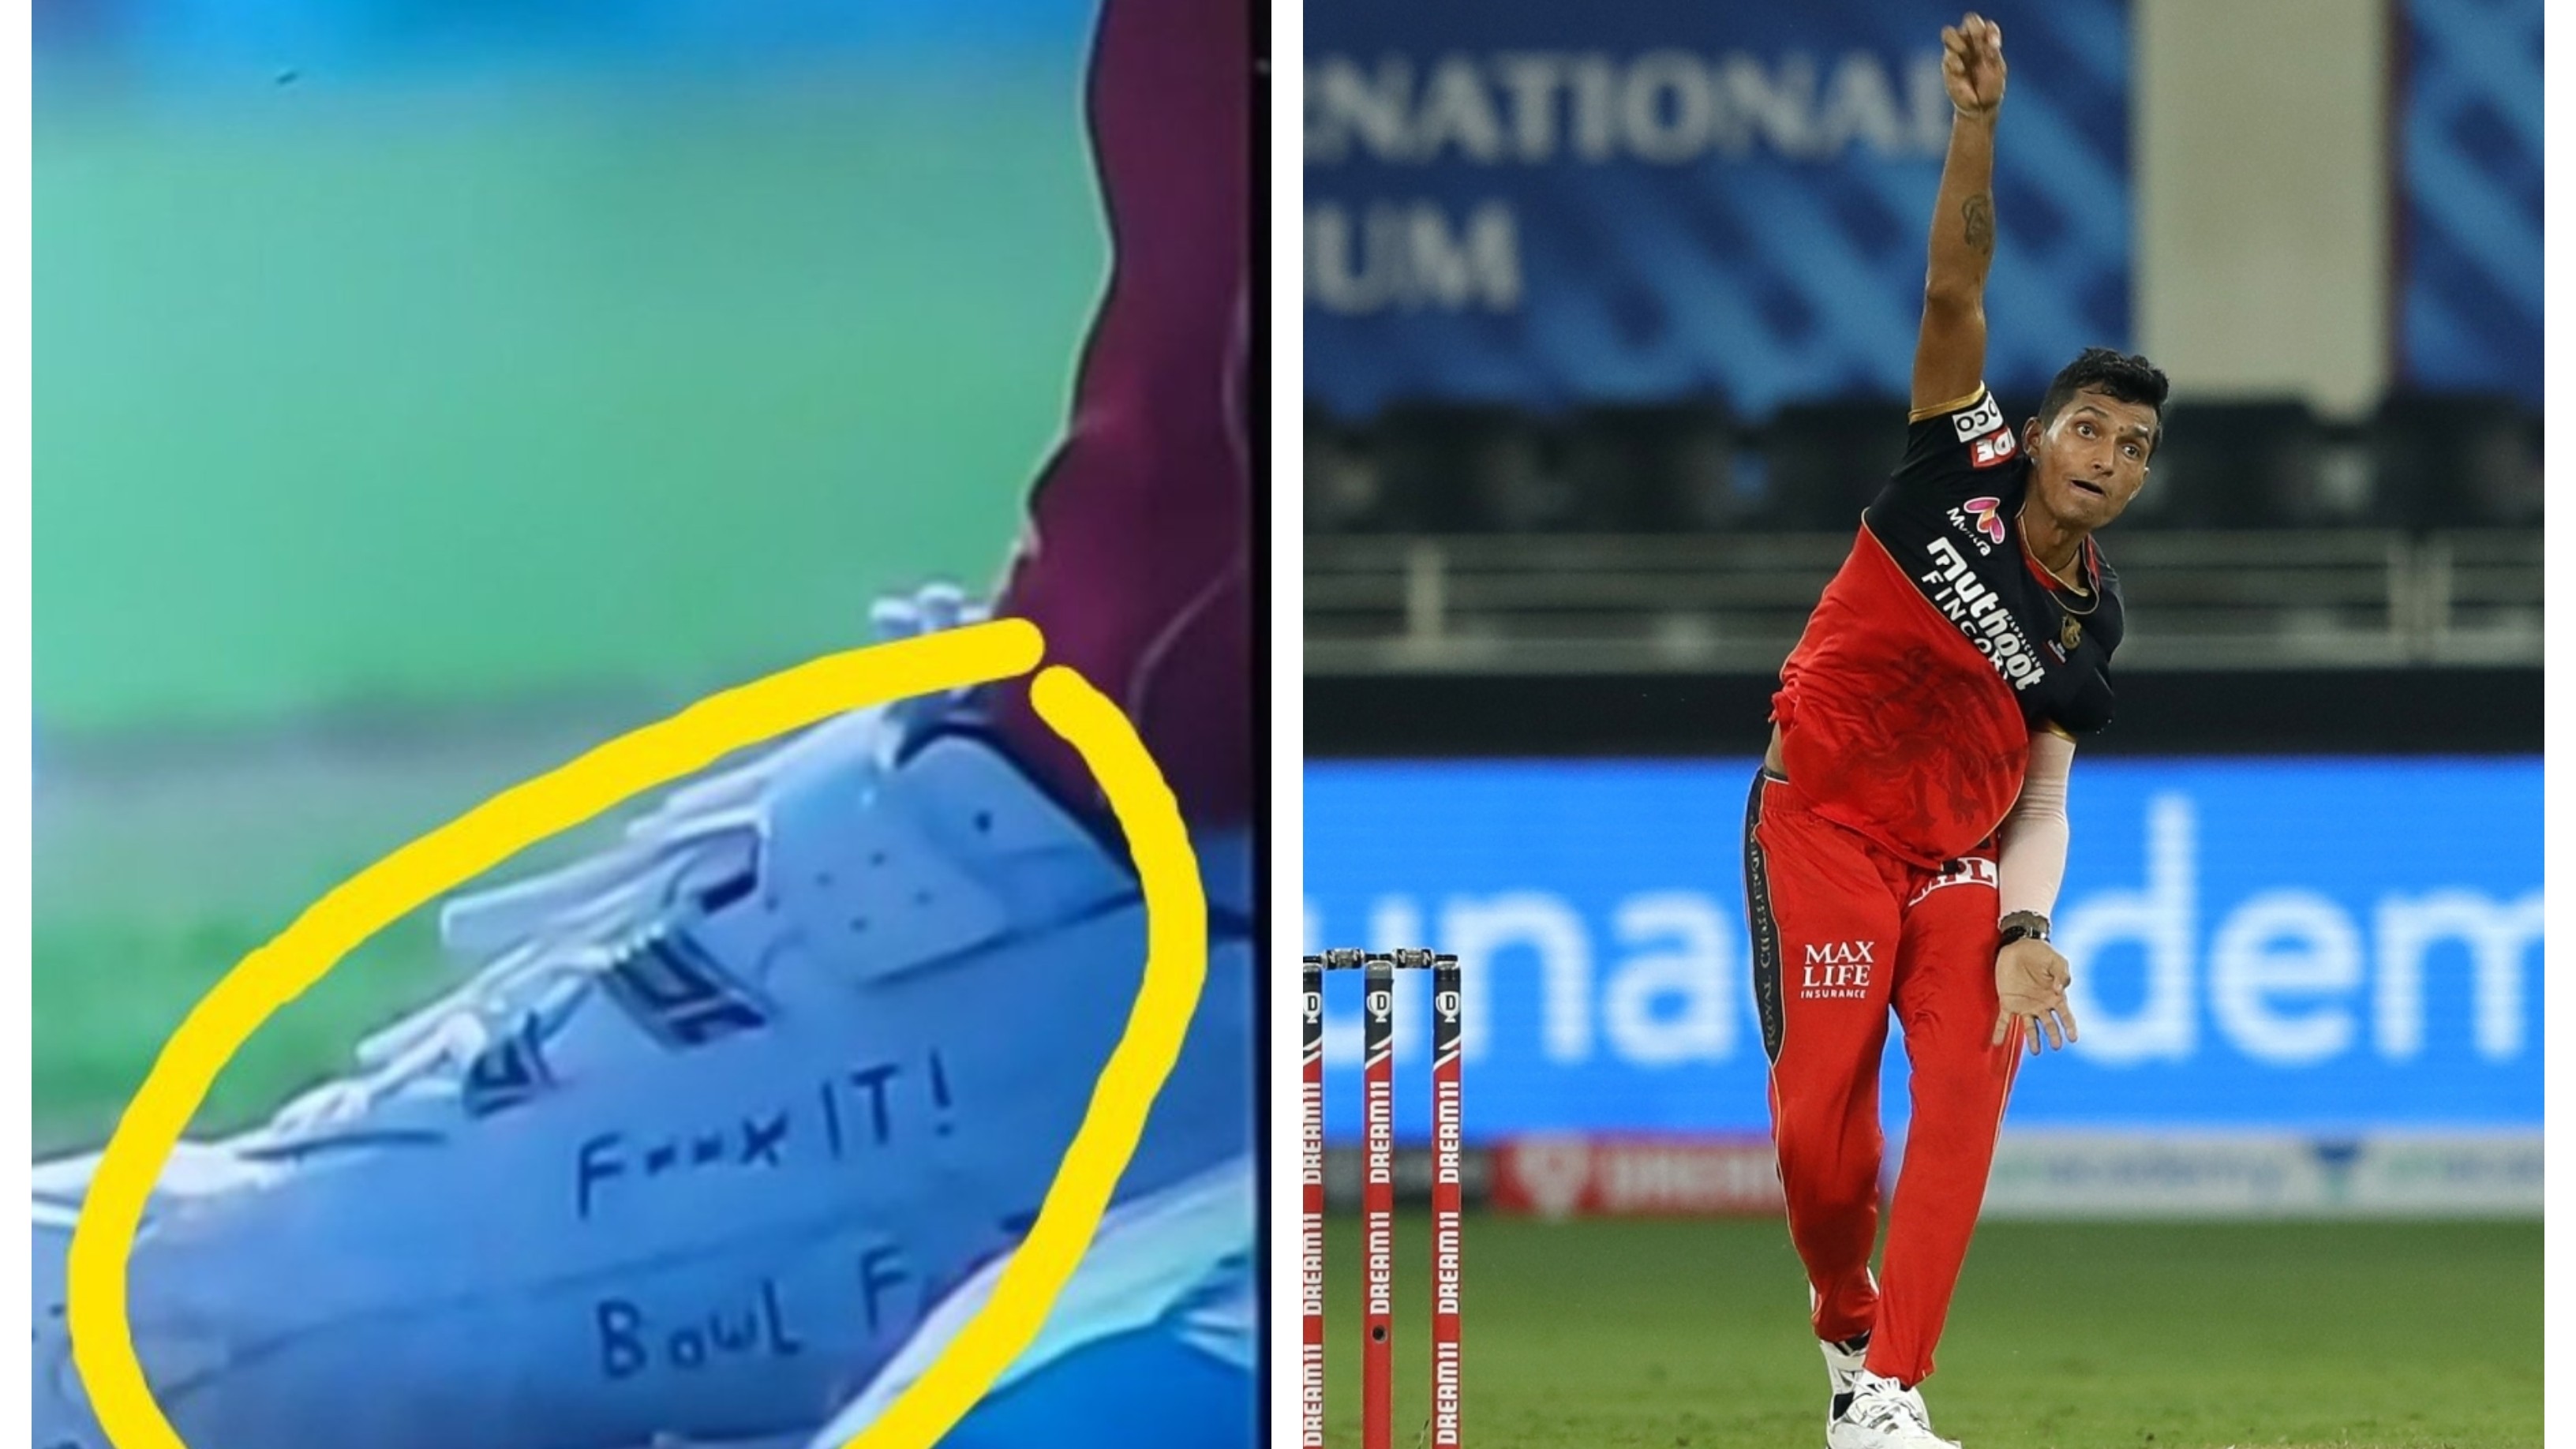 IPL 2020: “F**k it! bowl fast”, Navdeep Saini has a motivational message written on his shoes